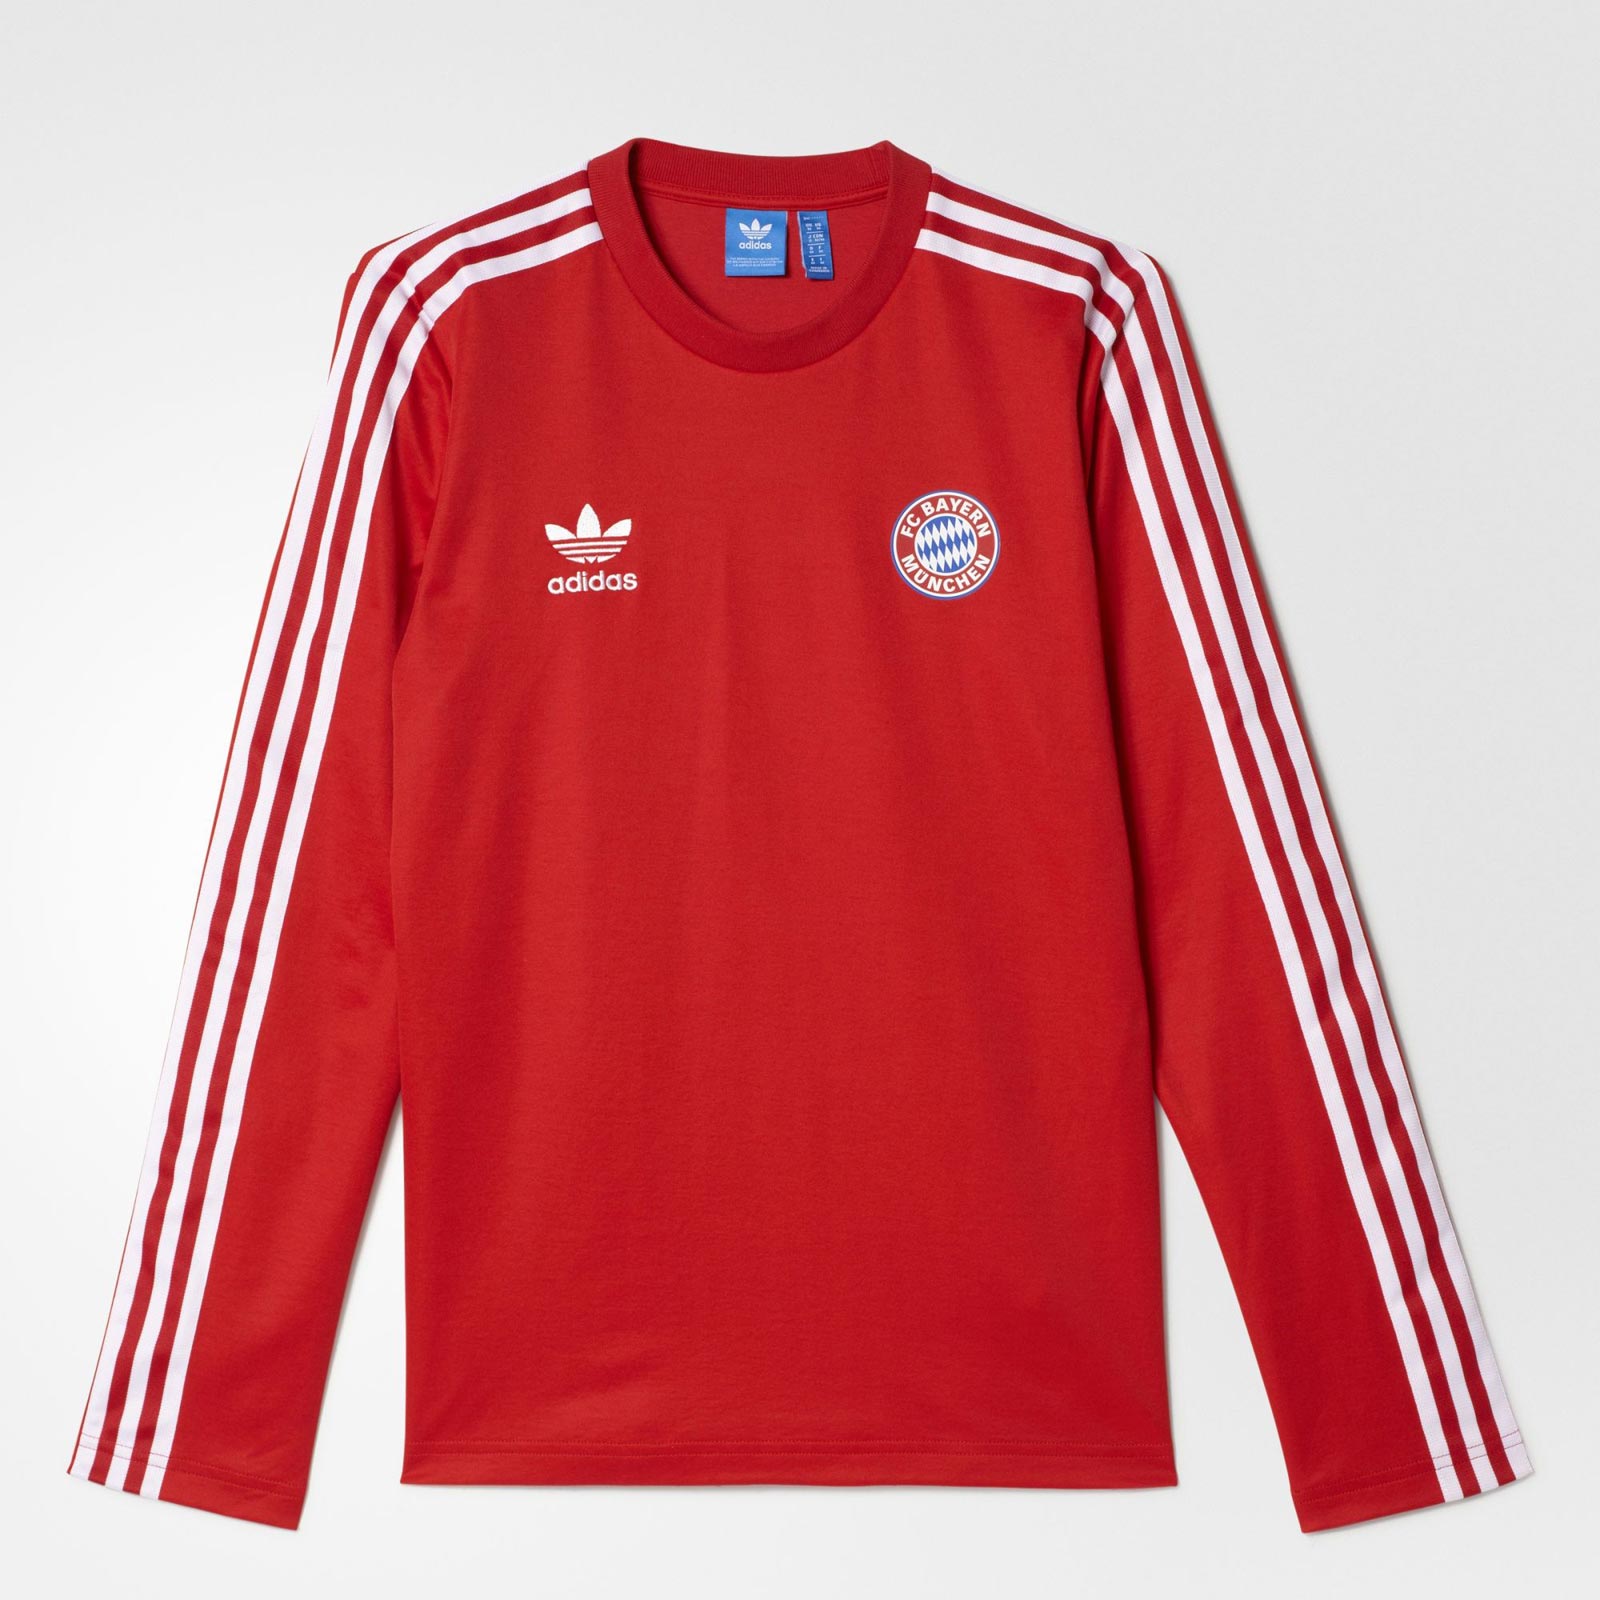 Adidas Originals Bayern Munich Collection Revealed - Footy Headlines